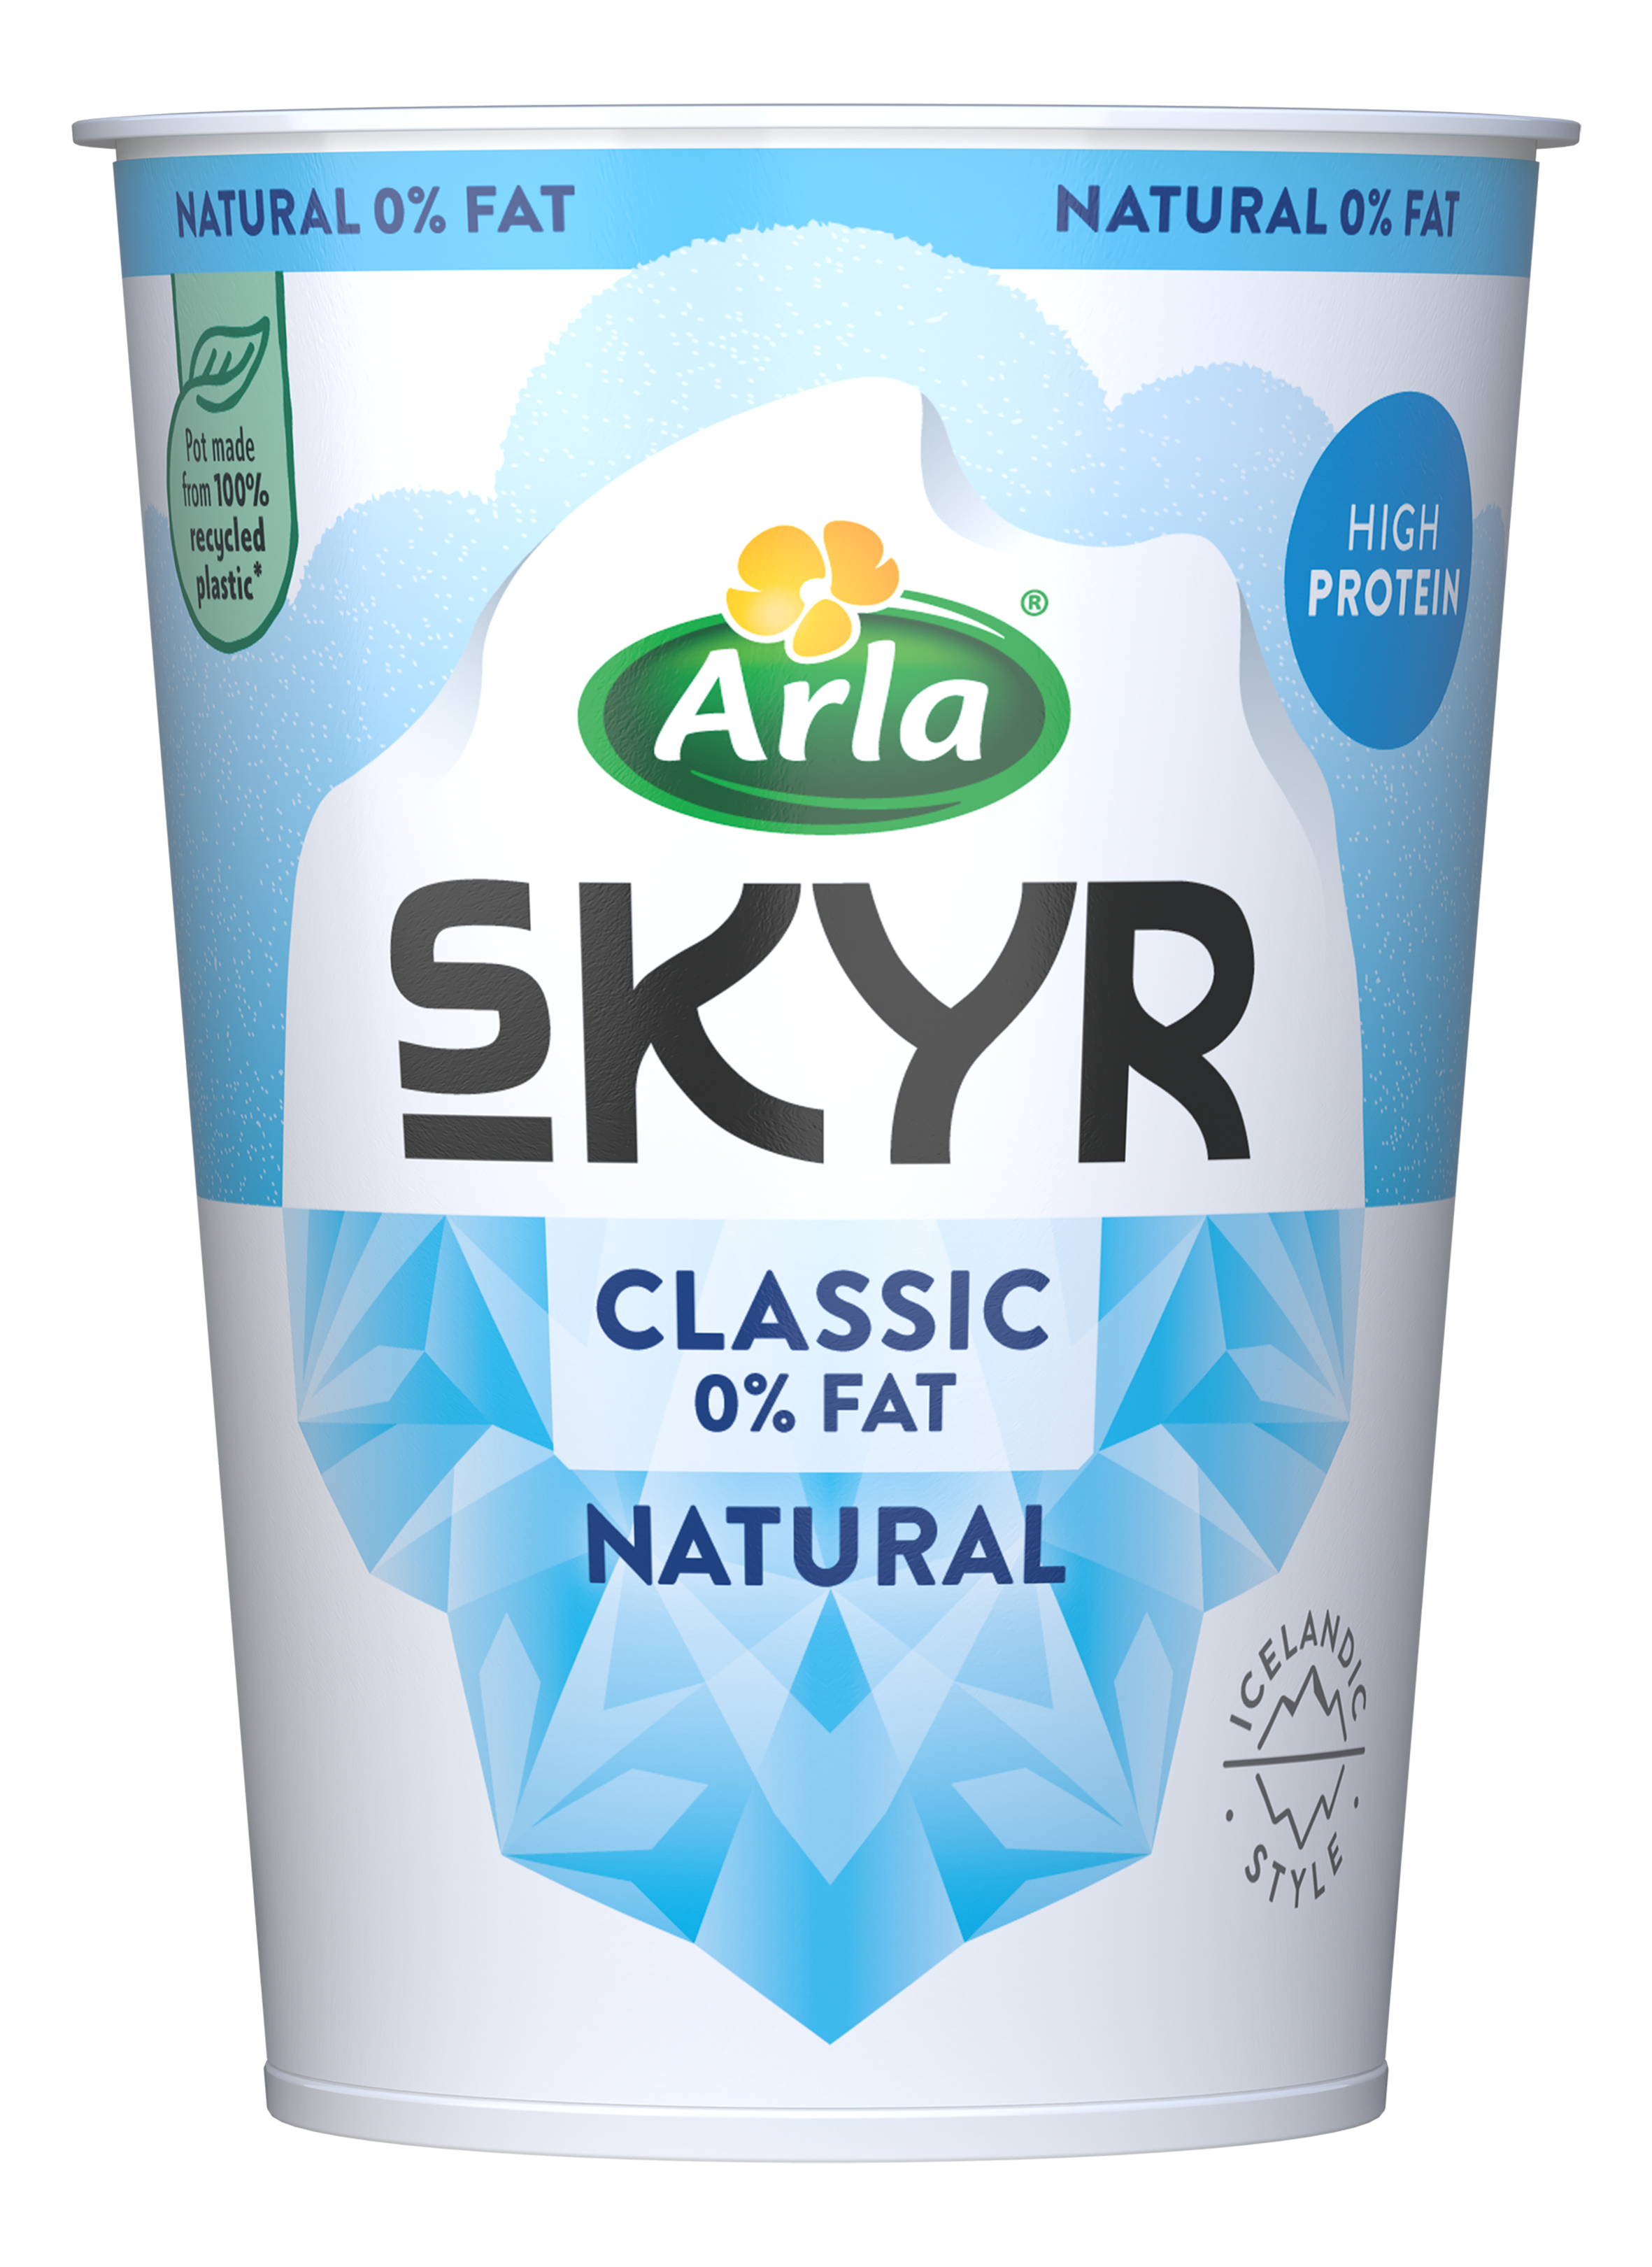 Skyr Yogurt - 16 ounce